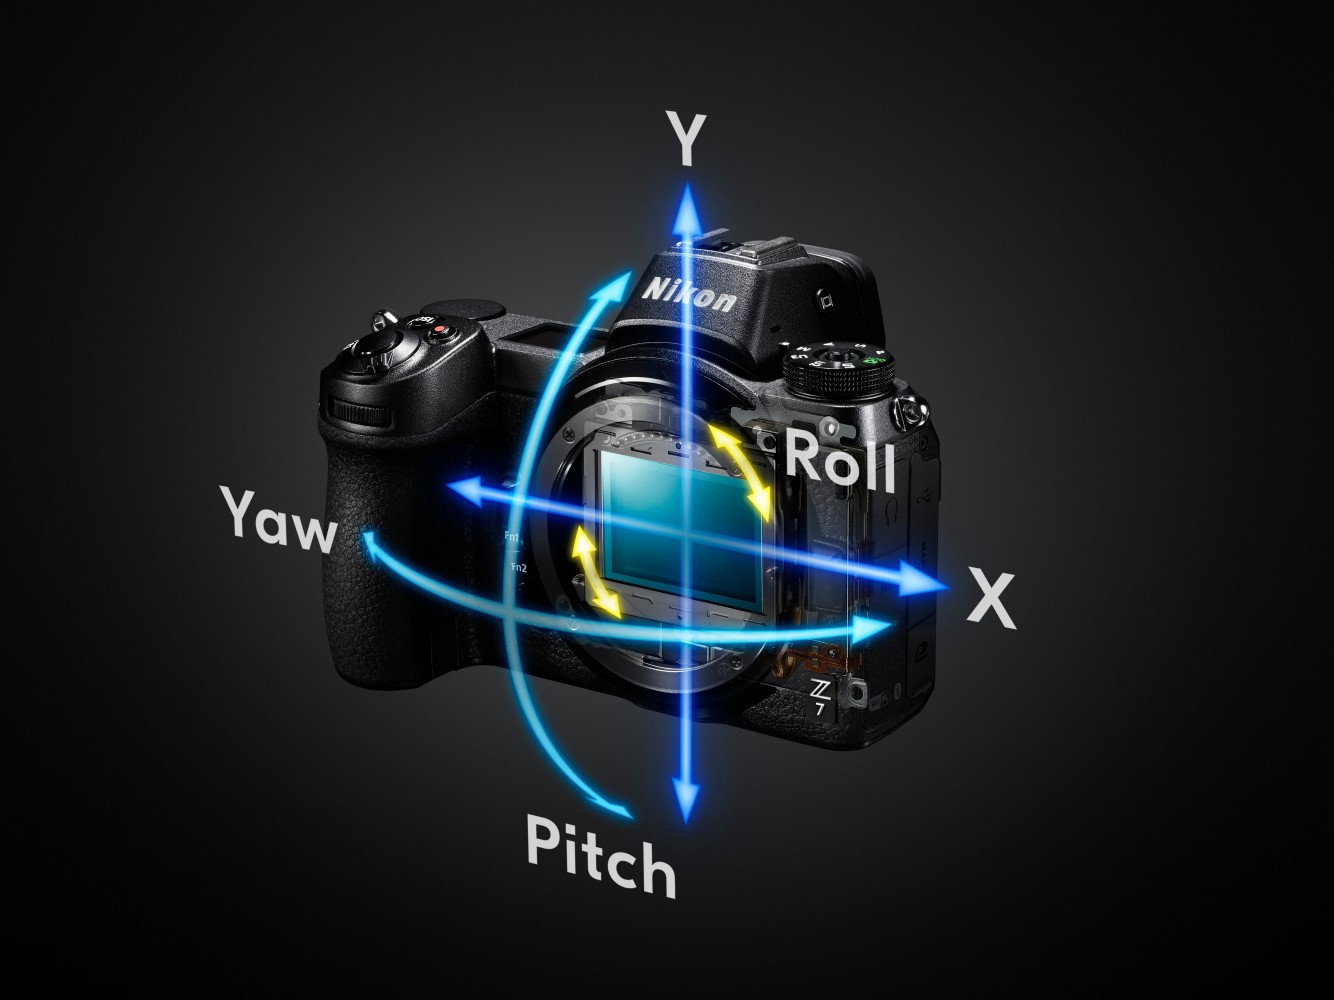 Stabilization axes of the Nikon Z7II image sensor.